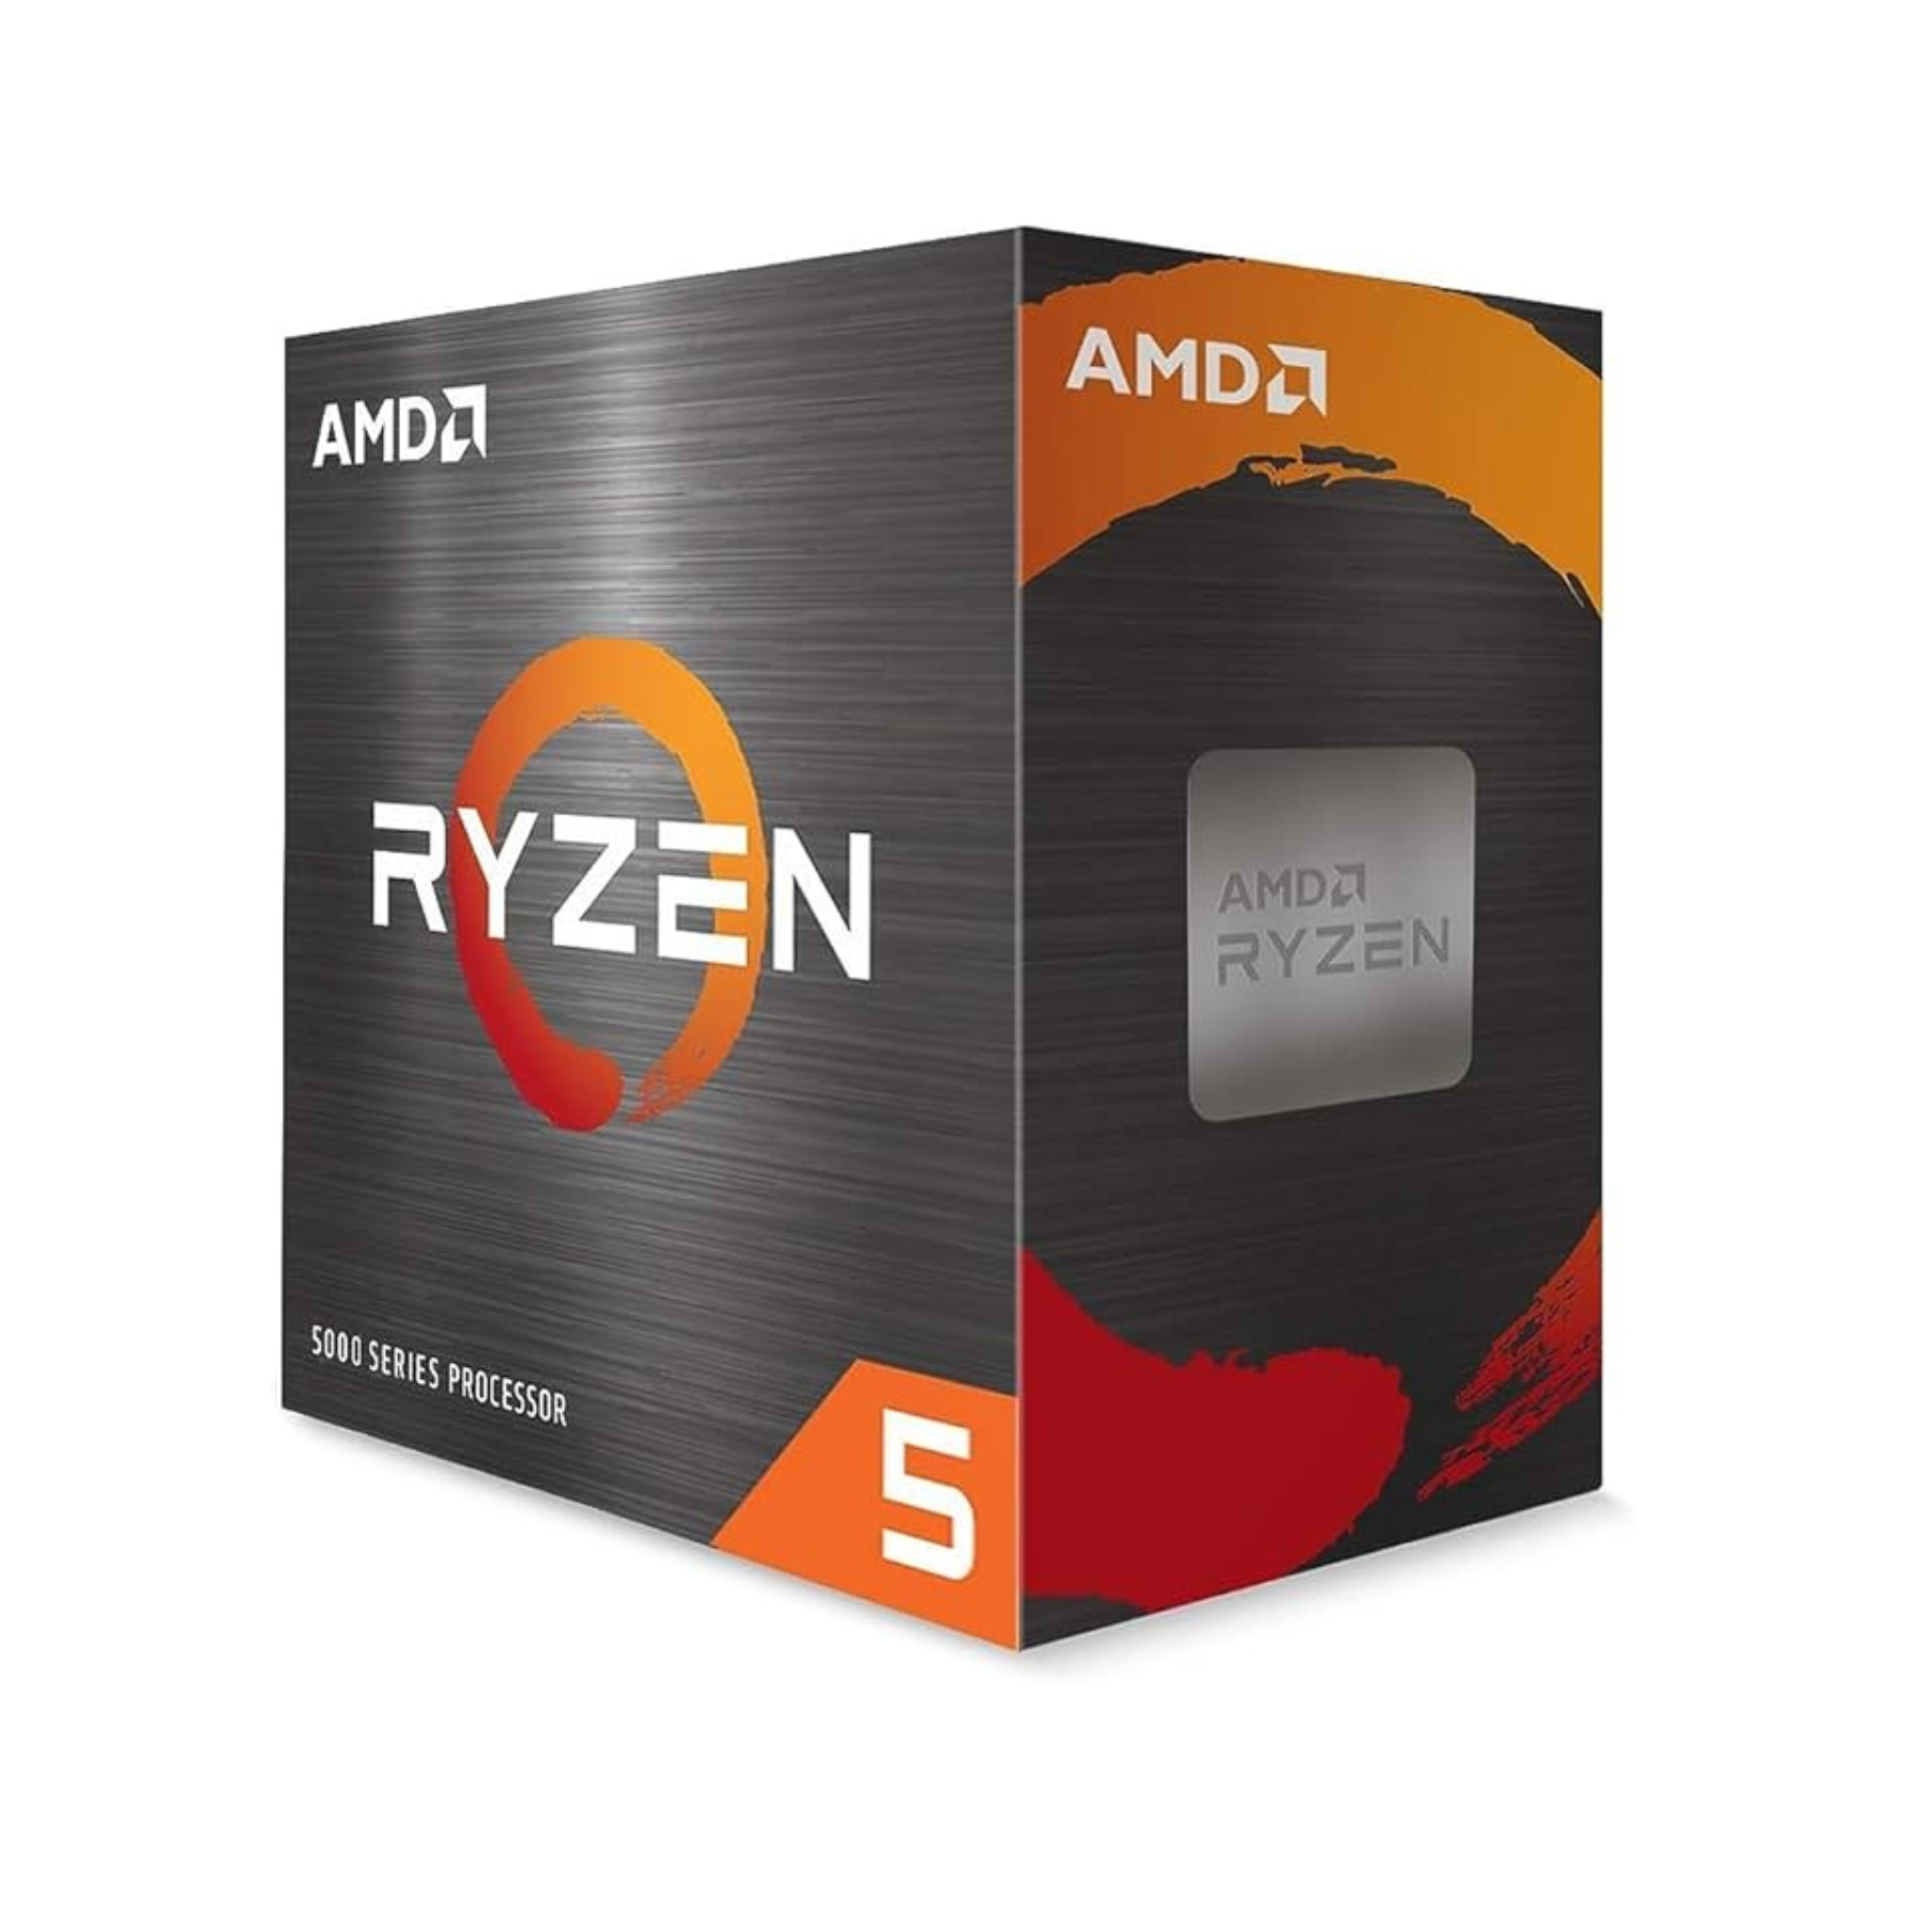 AMD Ryzen 5 5600X 3.7GHz Unlocked Desktop Processor w/ Wraith Stealth Cooler